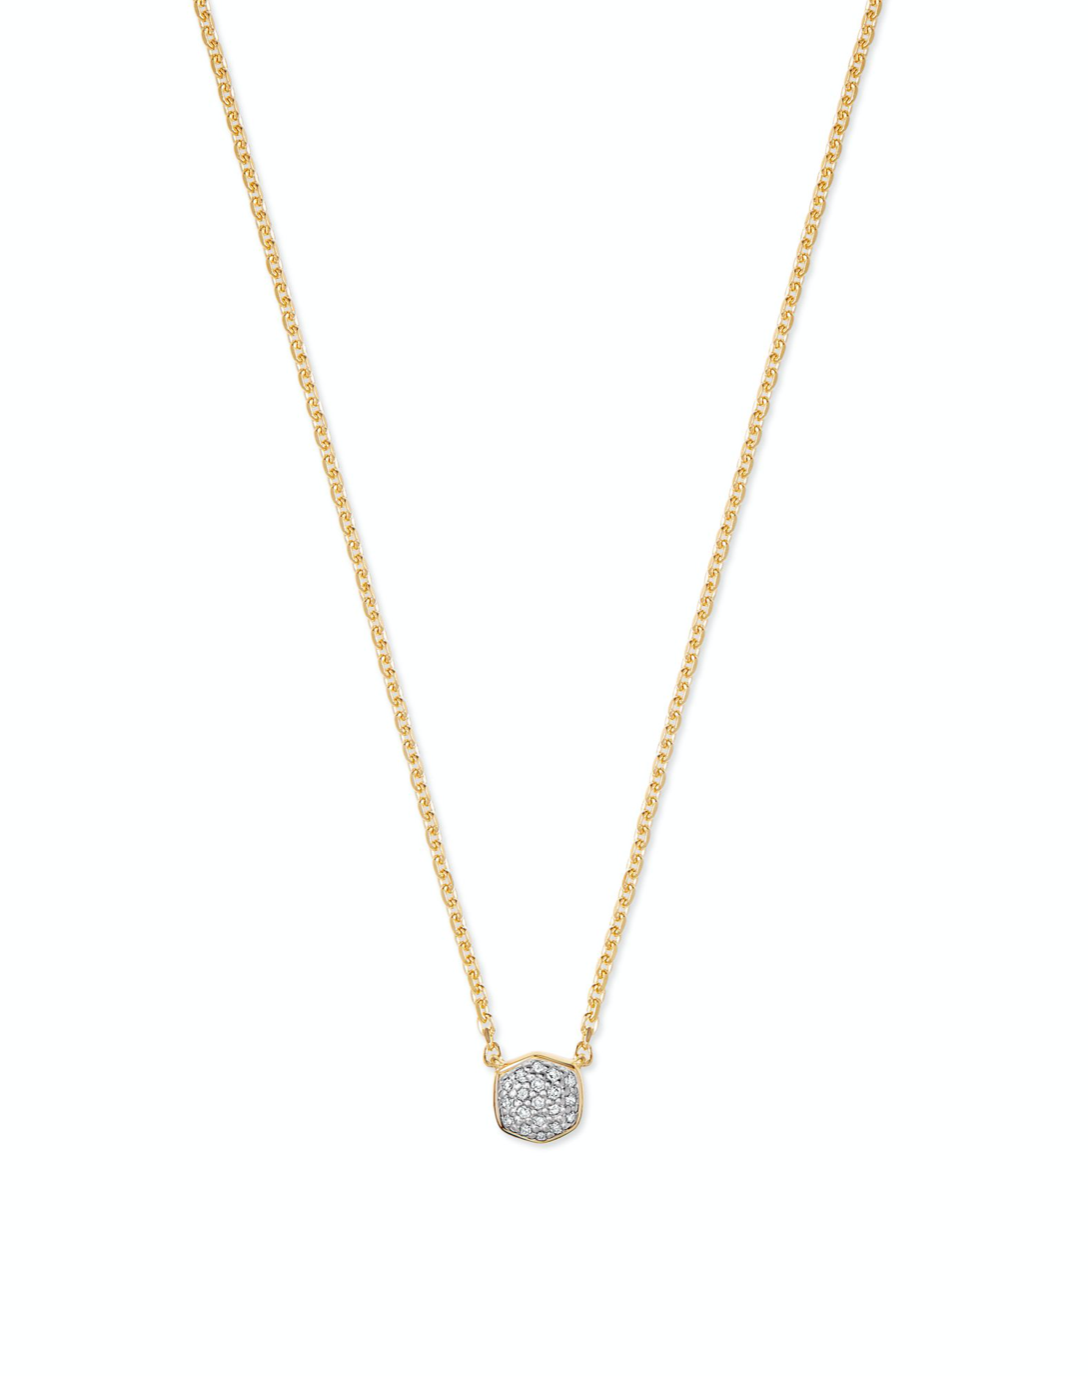 Davie Pave Pendant Necklace in 18k Gold Diamond